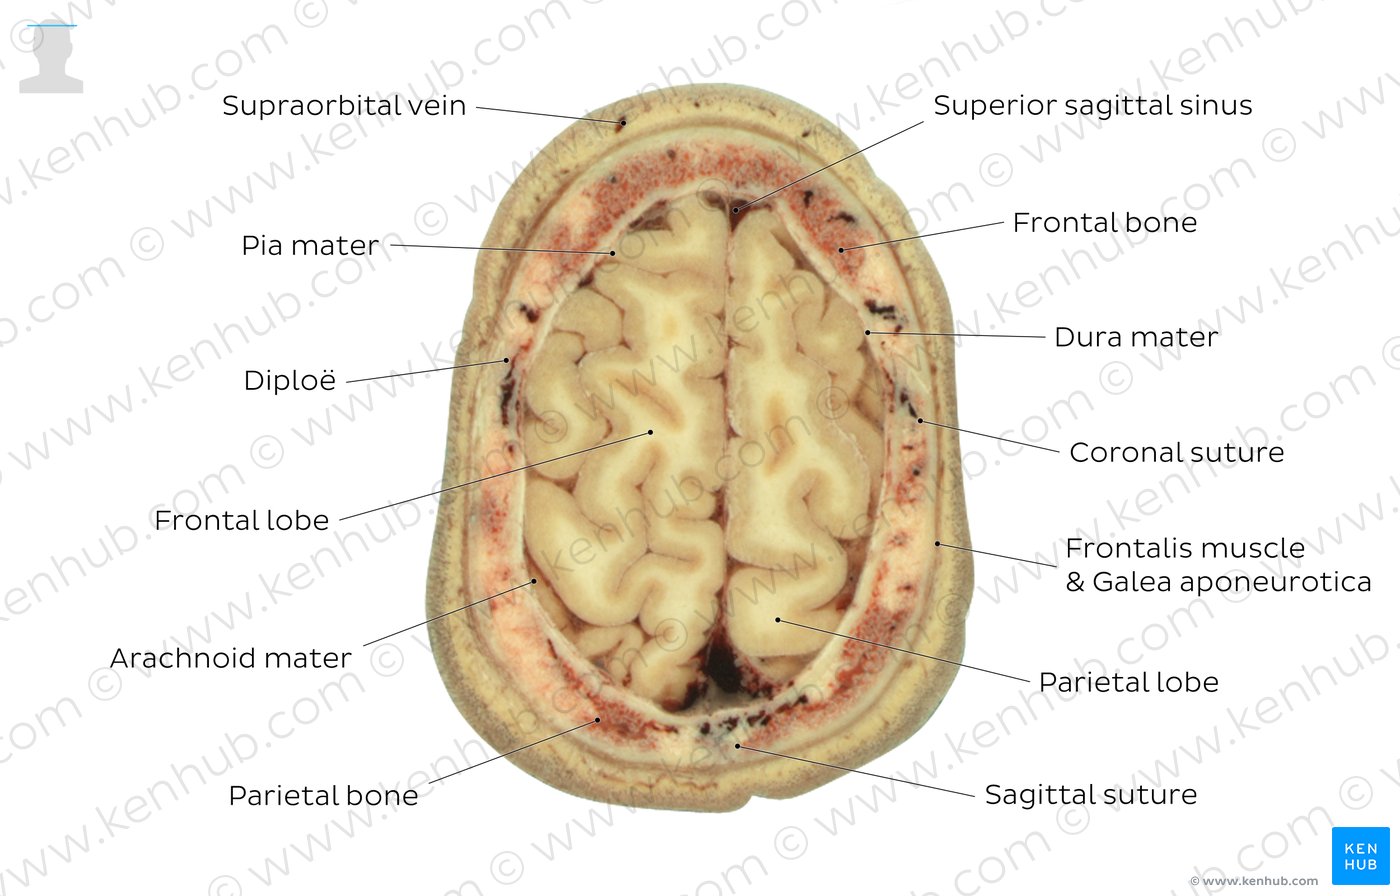 Superior sagittal sinus level: Overview